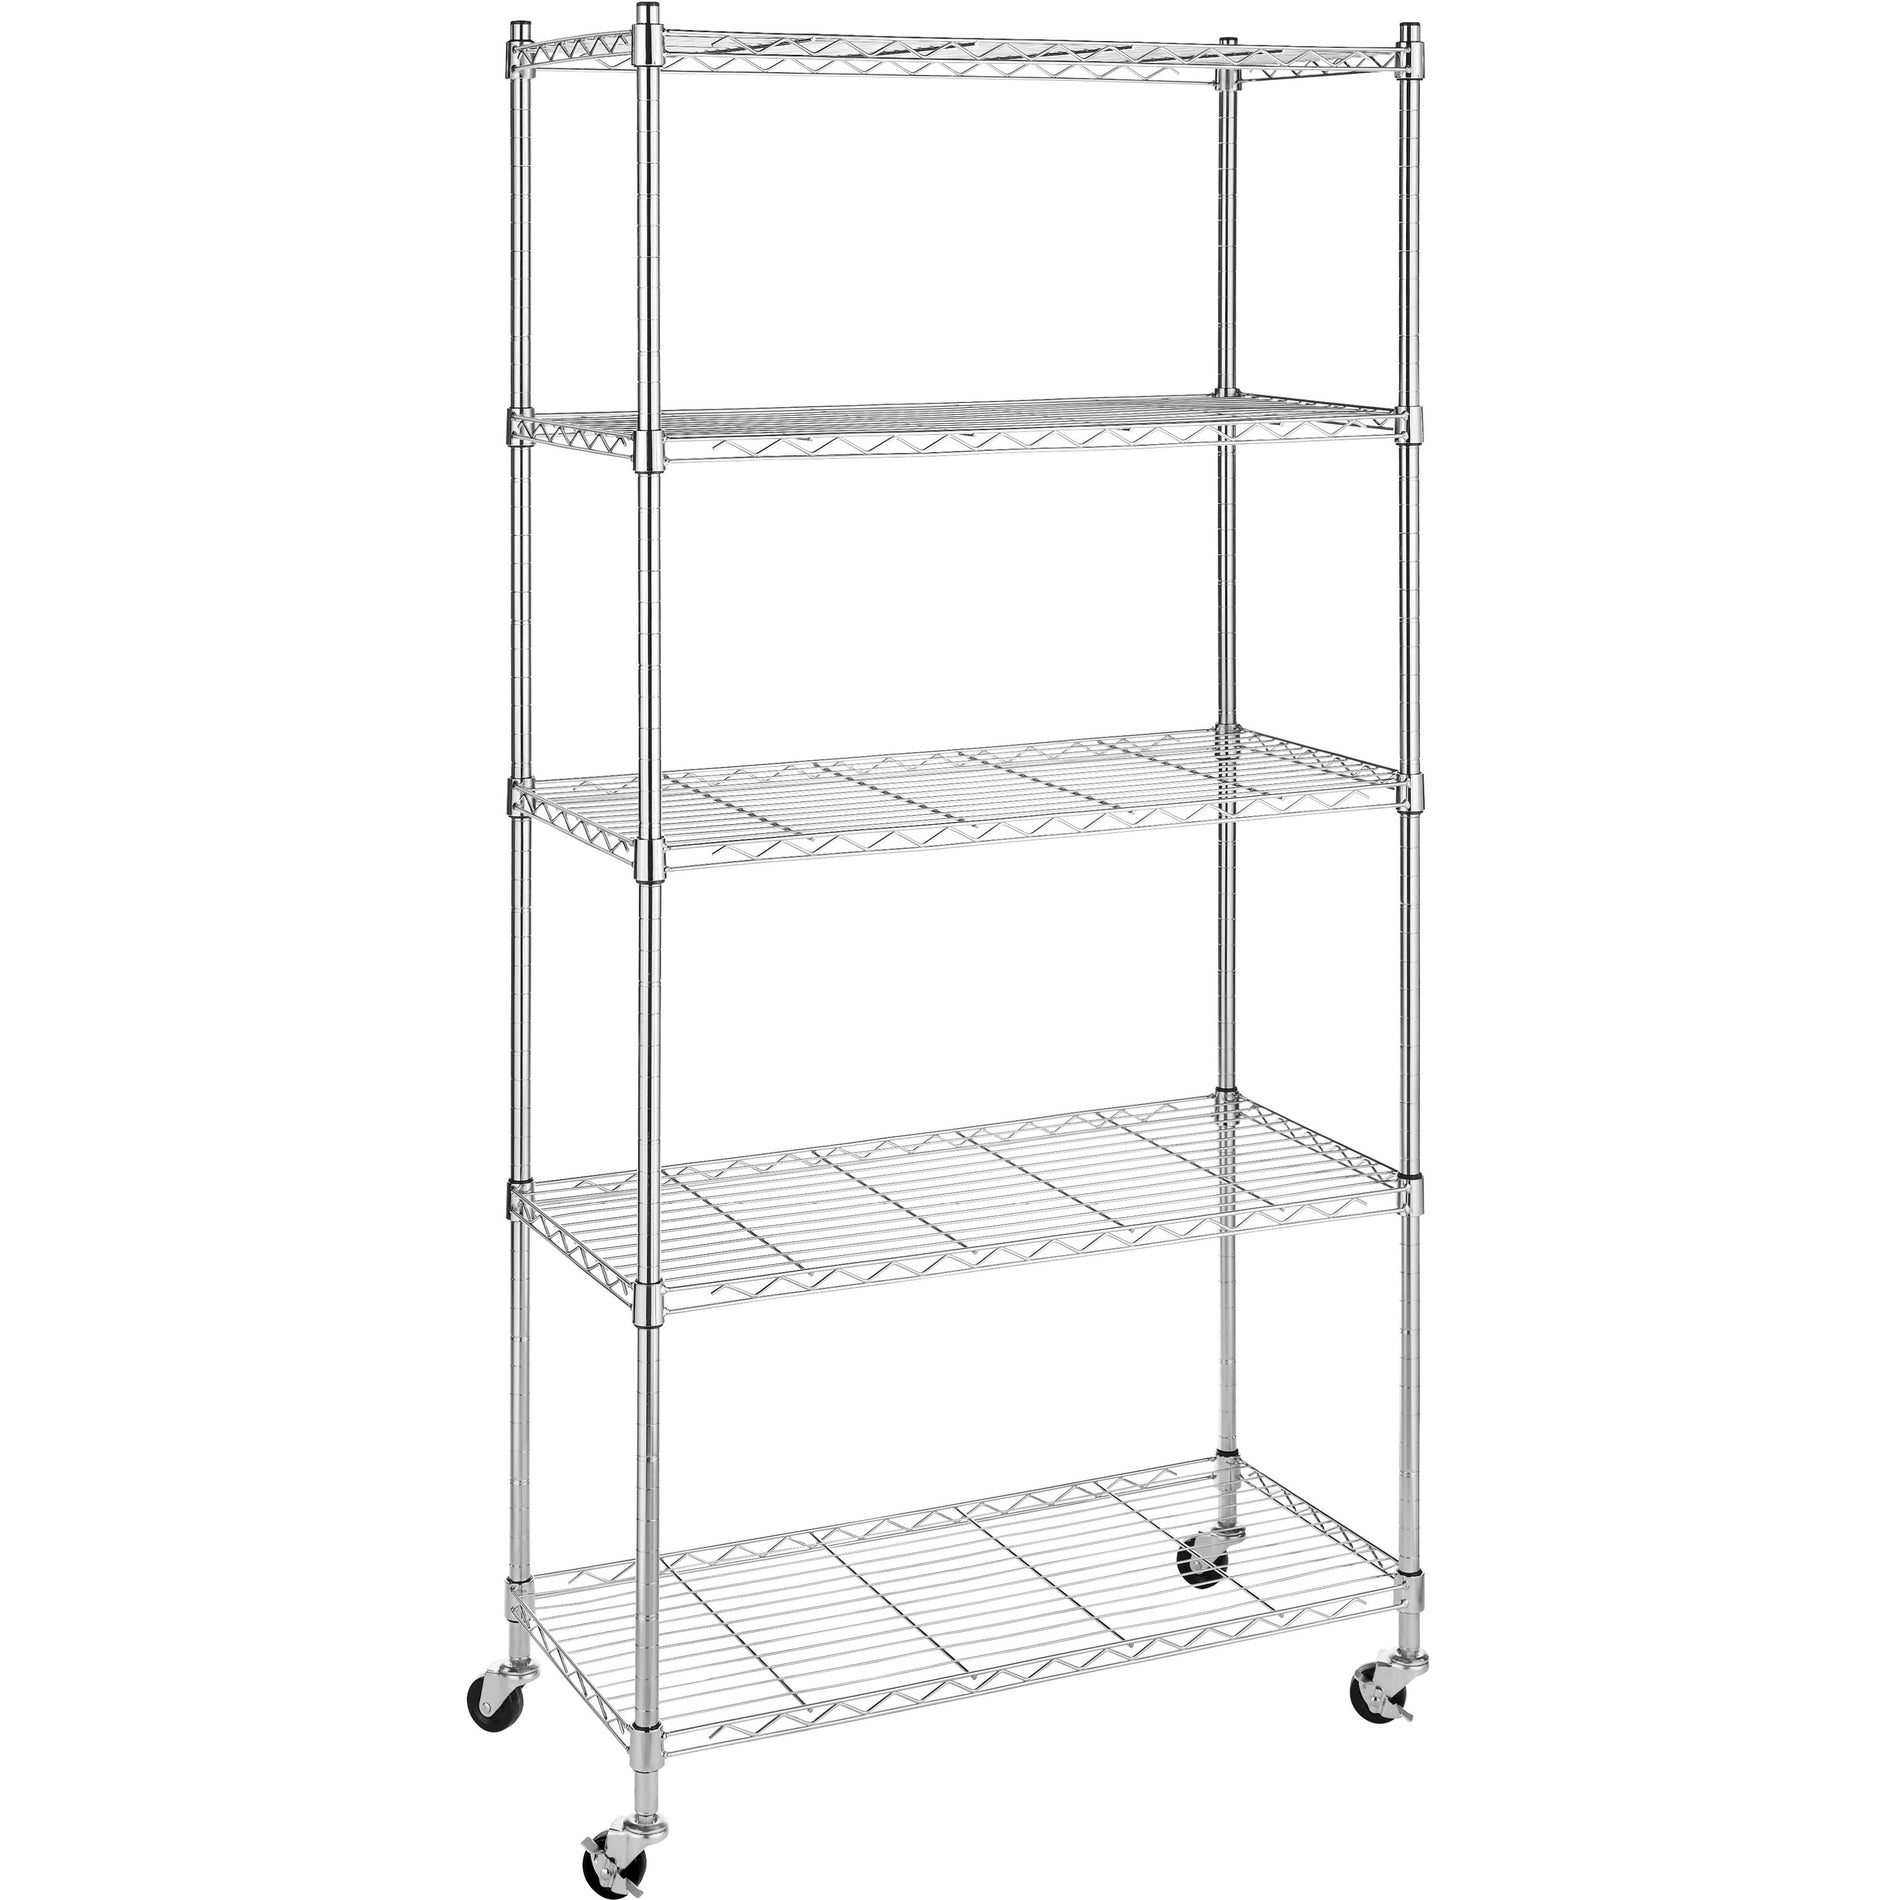 Whitmor 6056-3528 Storage Rack, Adjustable Shelves, Durable, Built-in Wheels, 200 lb Maximum Load Capacity